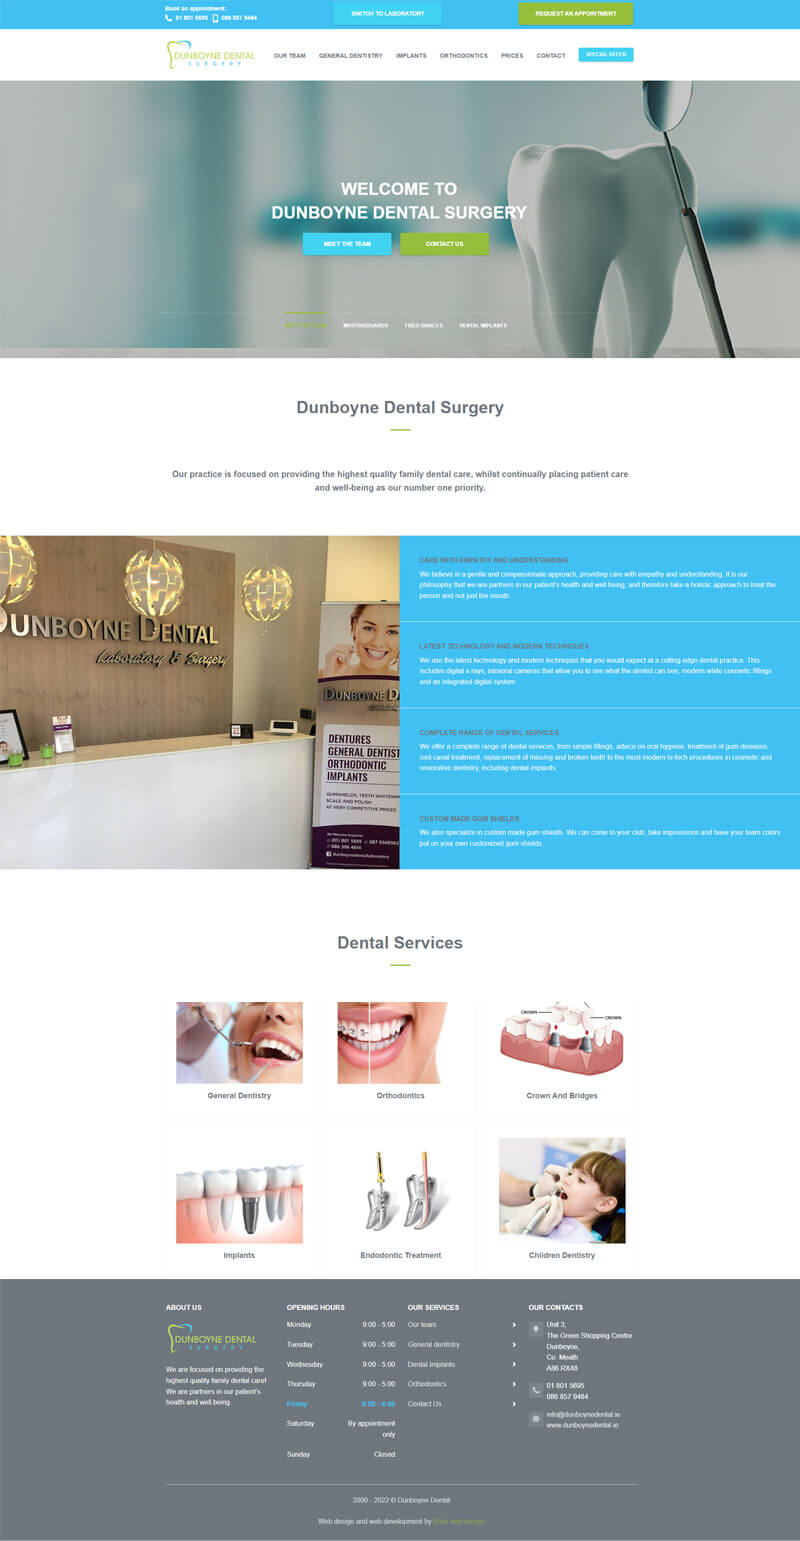 Our work - Dunboyne dental